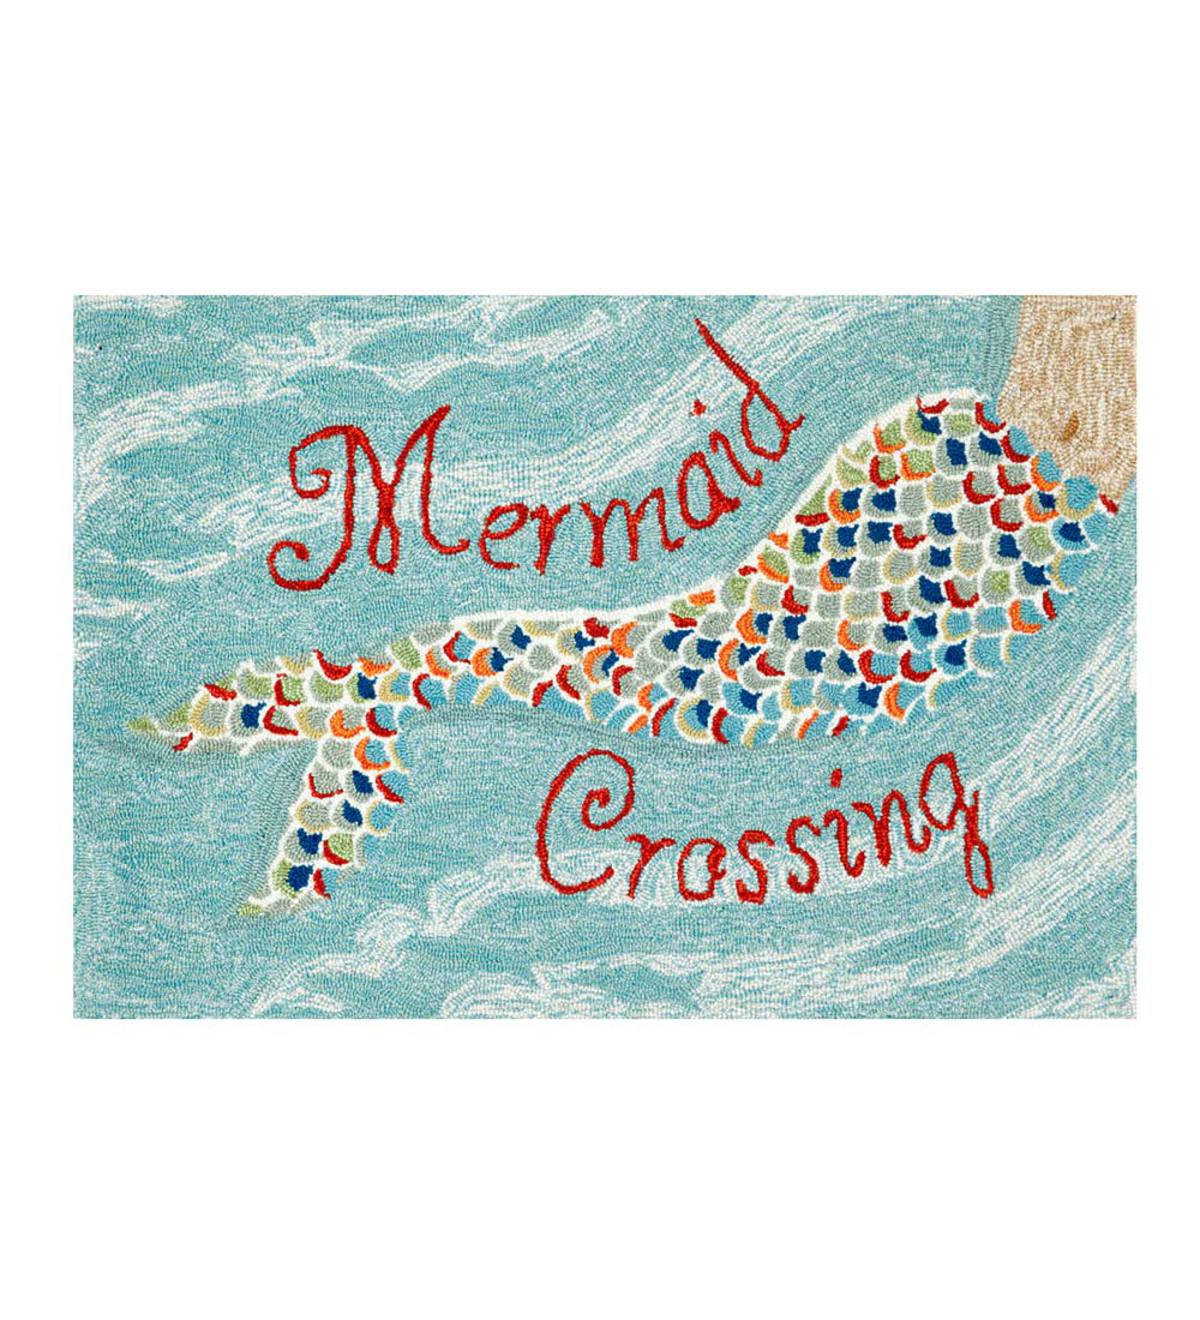 Mermaid Crossing Accent Rug, 30"W x 48"L